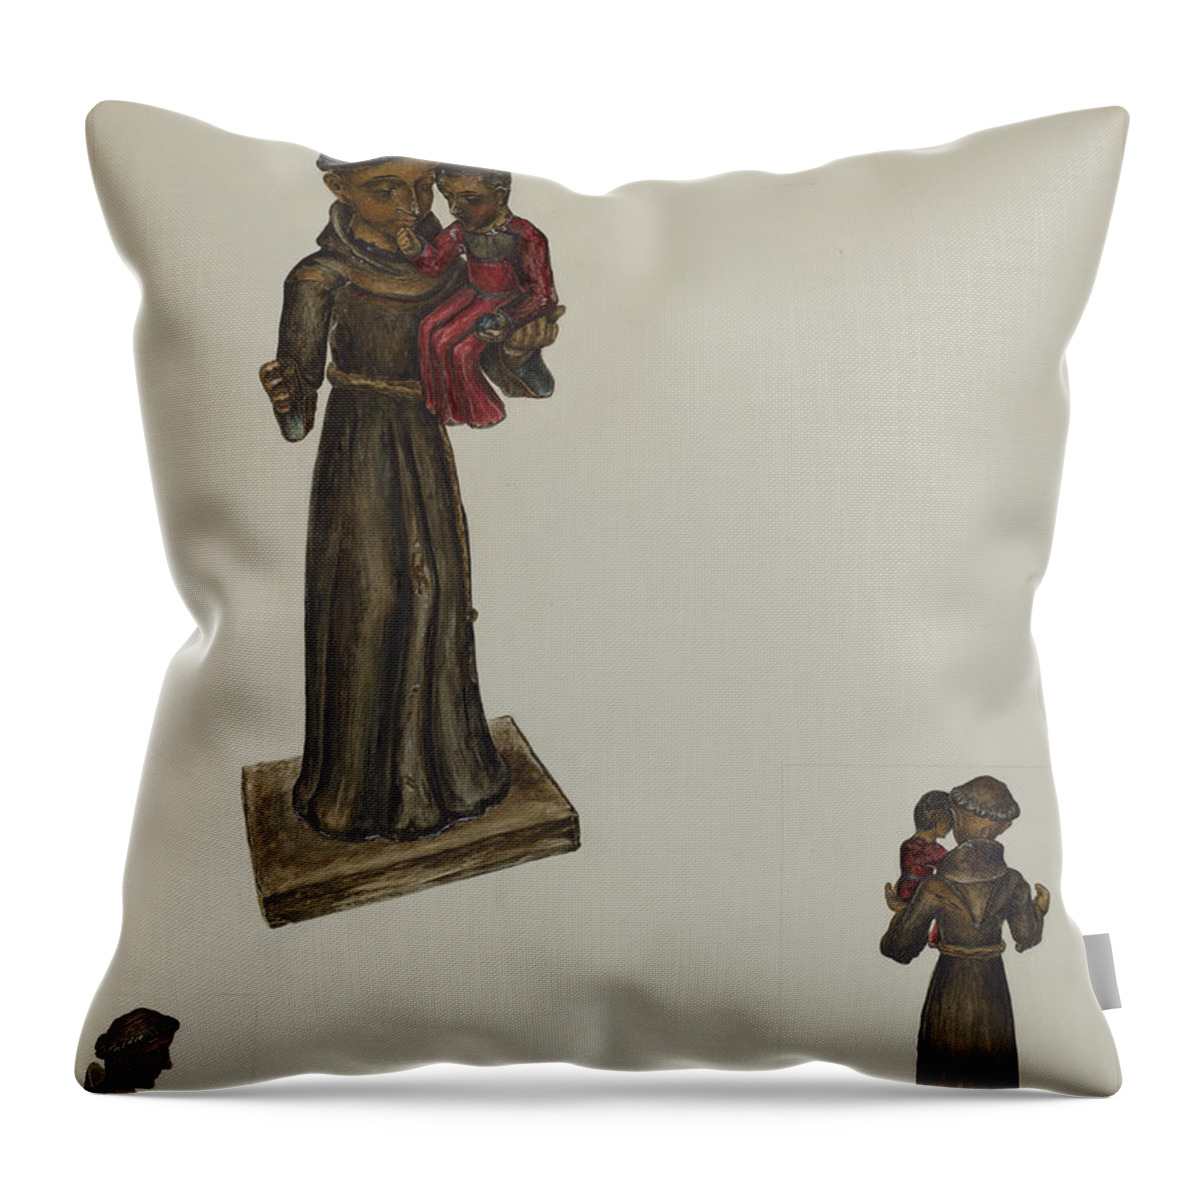  Throw Pillow featuring the drawing Santo by Eldora P. Lorenzini